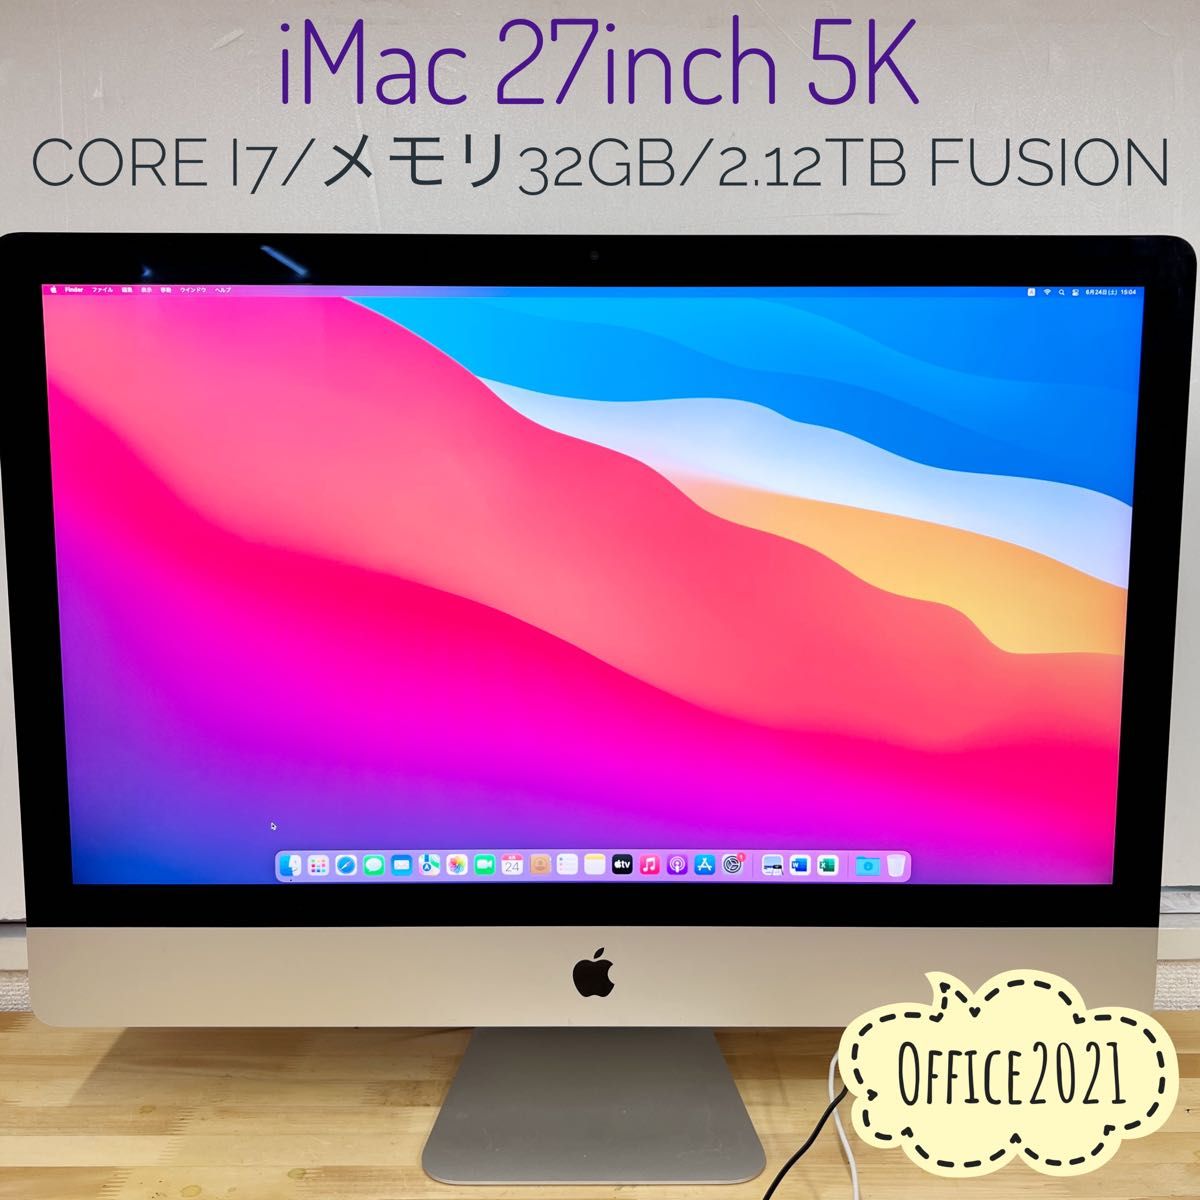 iMac 27inch 5K Core i7 メモリ32GB 2TB Fusion Office2021付き